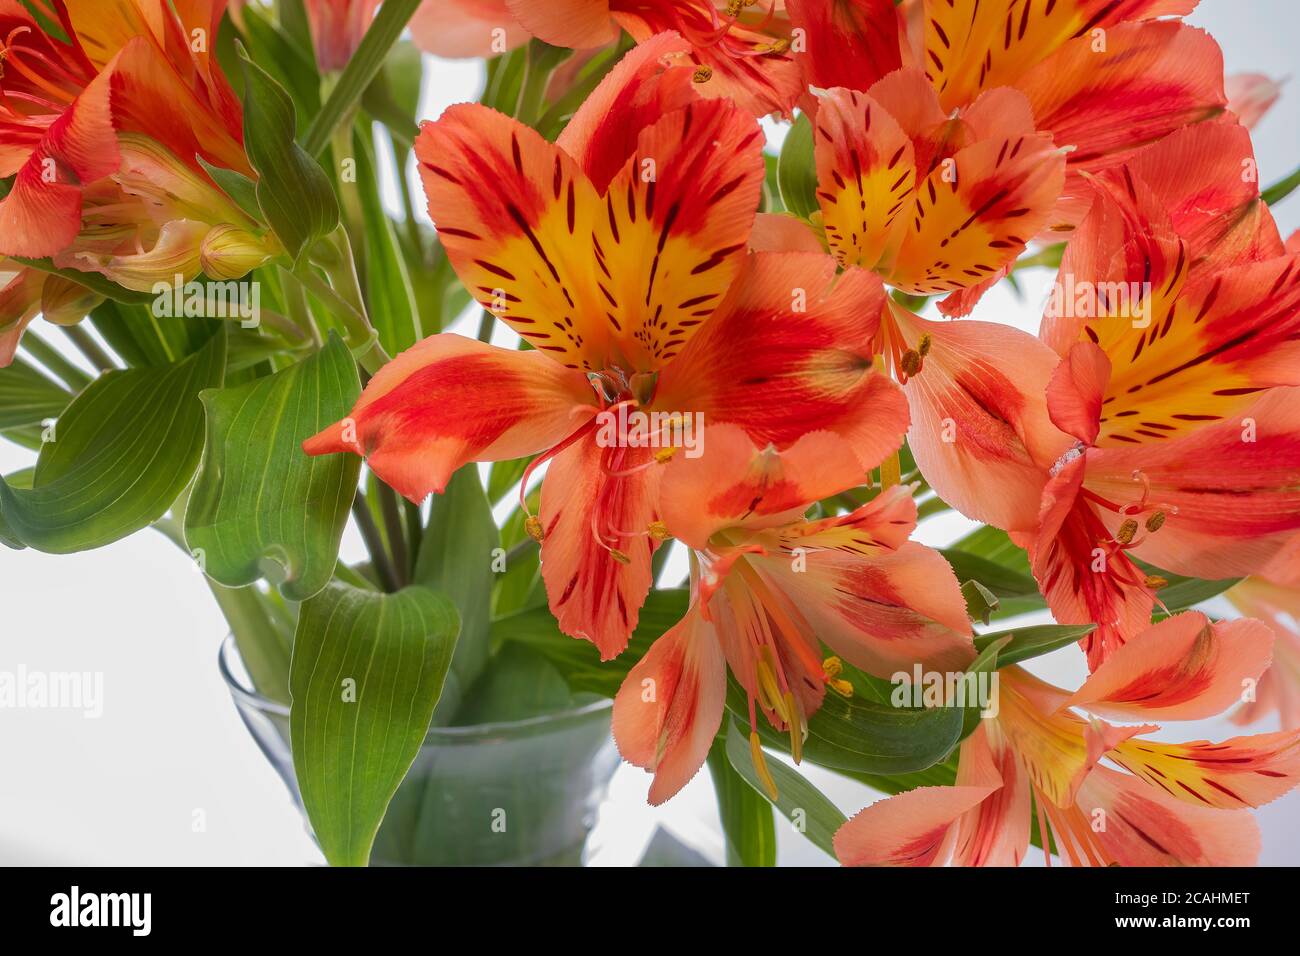 ASTROMELIA FLOWER ON WHITE BACKGROUND Stock Photo - Alamy